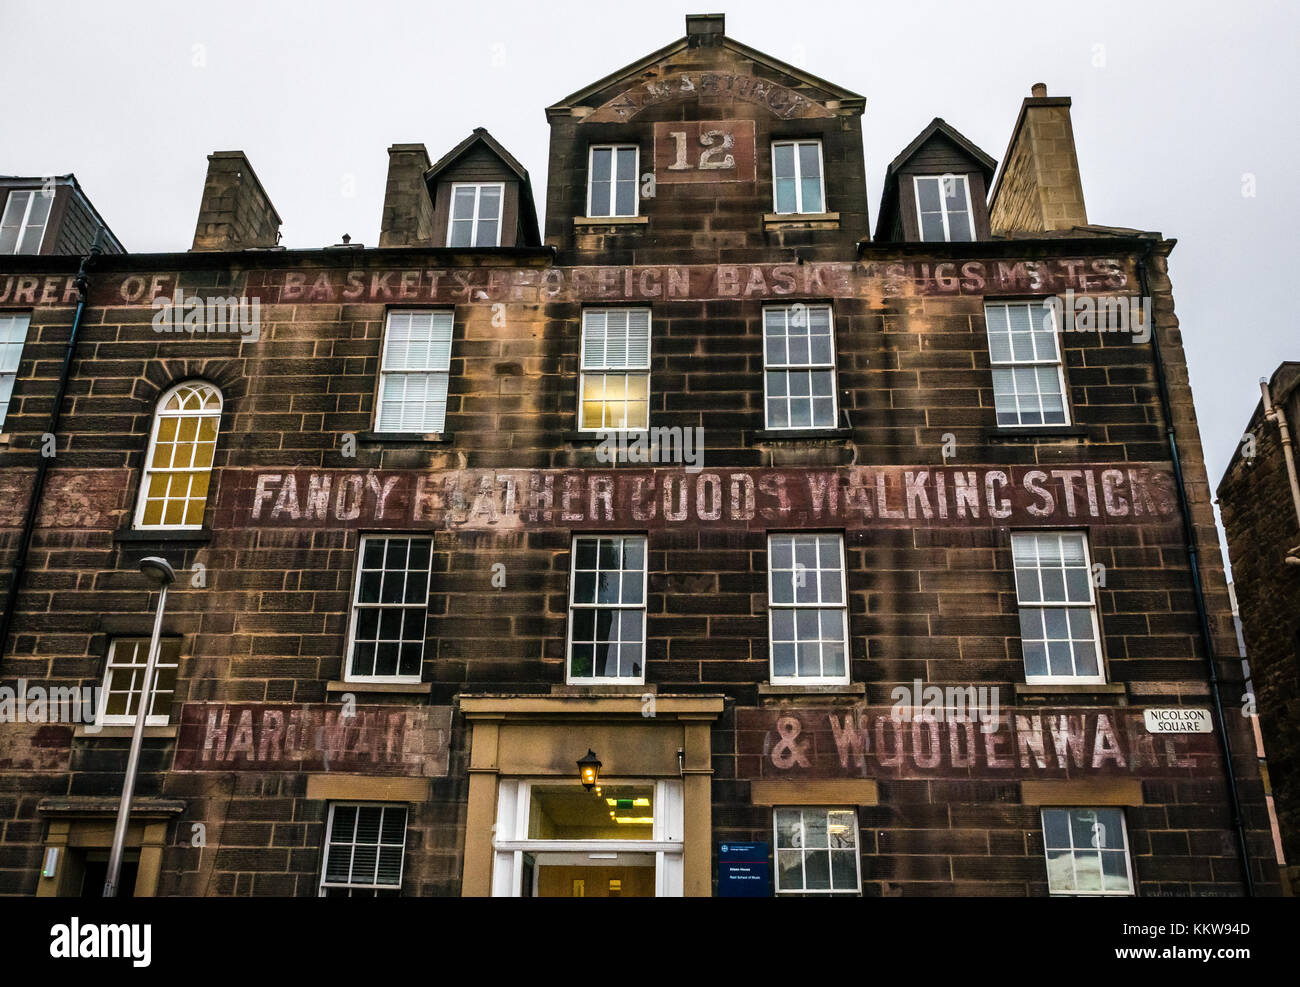 University of Edinburgh, Alison House, Reid School of Music, Georgian town house with old hardware shop ghost lettering advertising fancy goods Stock Photo